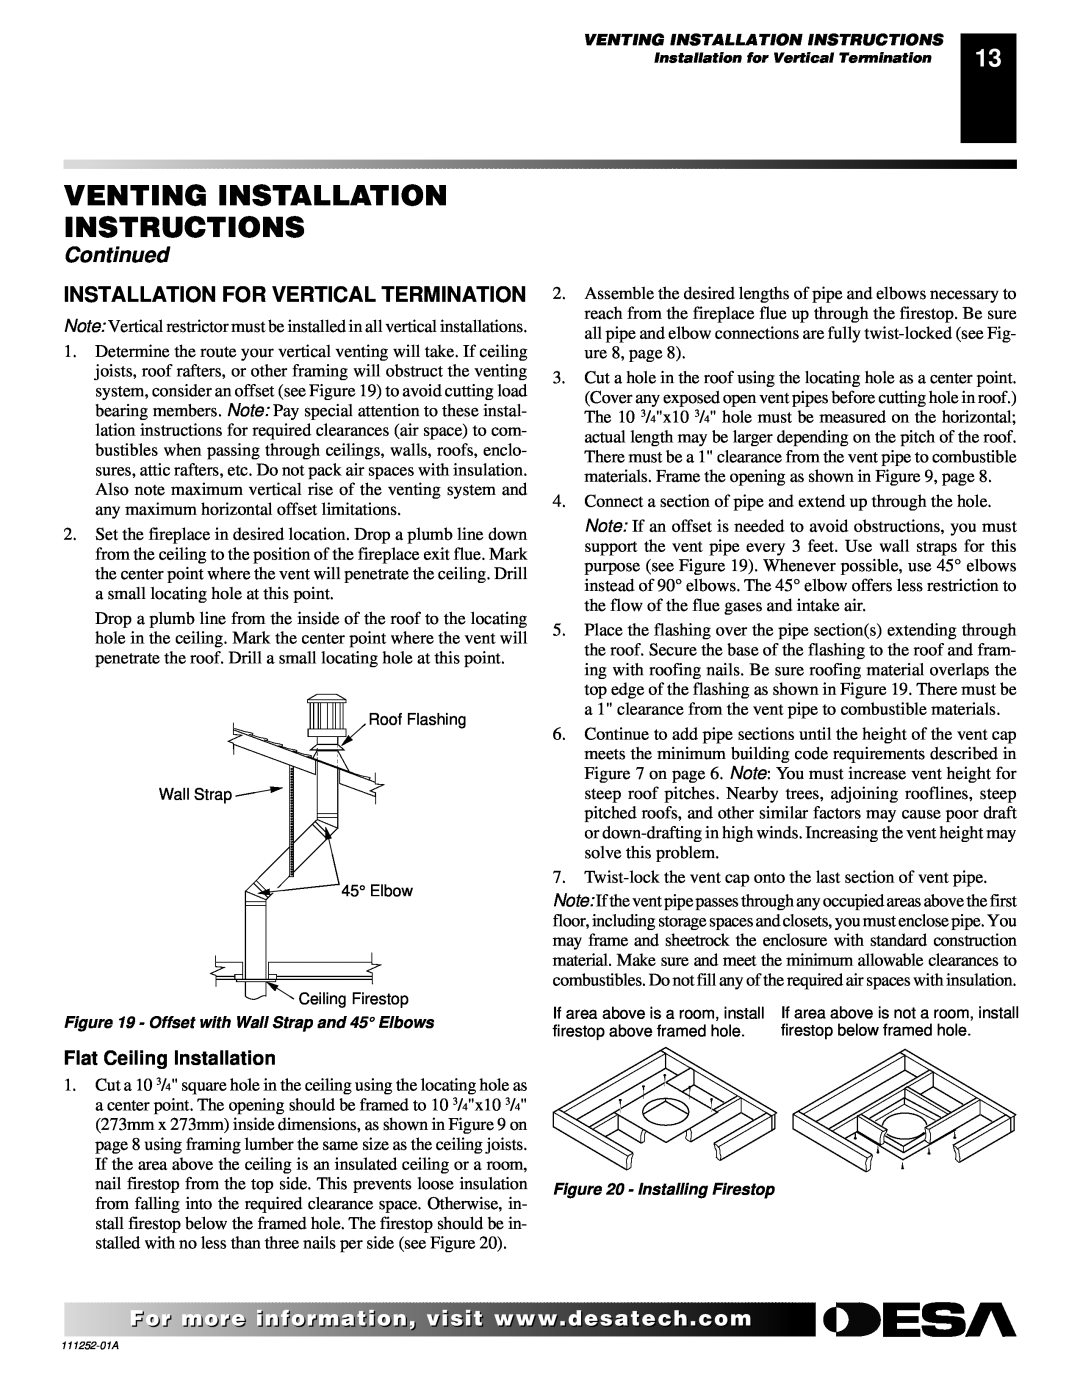 Desa CHDV36NRA Installation For Vertical Termination, Flat Ceiling Installation, Venting Installation Instructions 